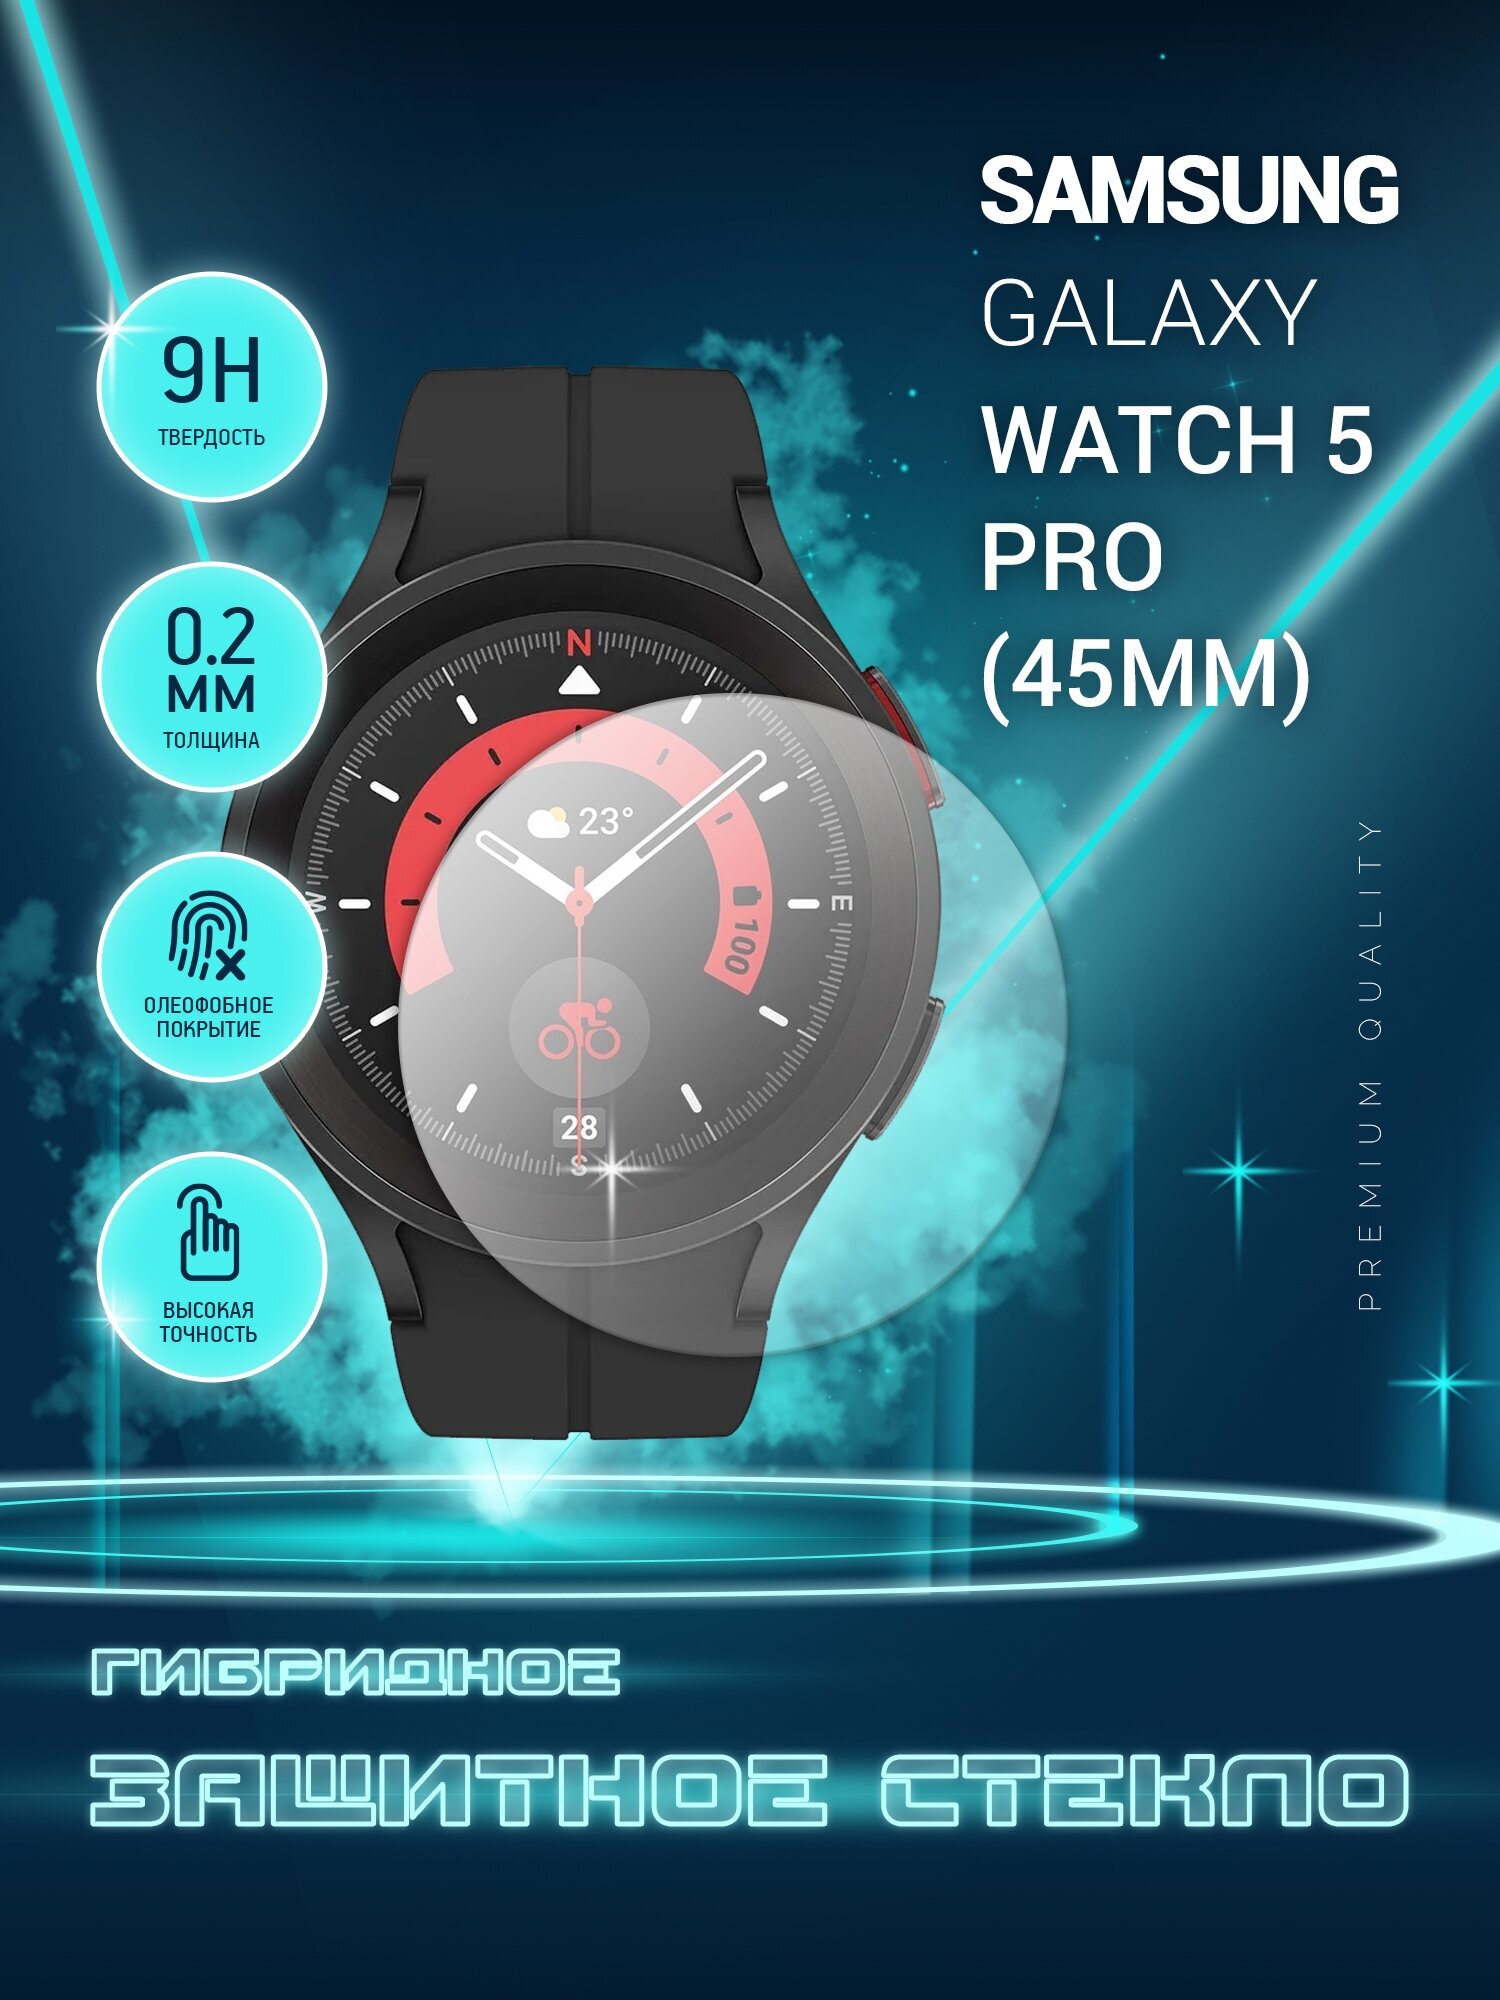 Защитное стекло на часы Samsung Galaxy Watch 5 Pro (45mm), Самсунг Галакси Вотч 5 Про 45 мм гибридное (пленка + стекловолокно), Crystal boost